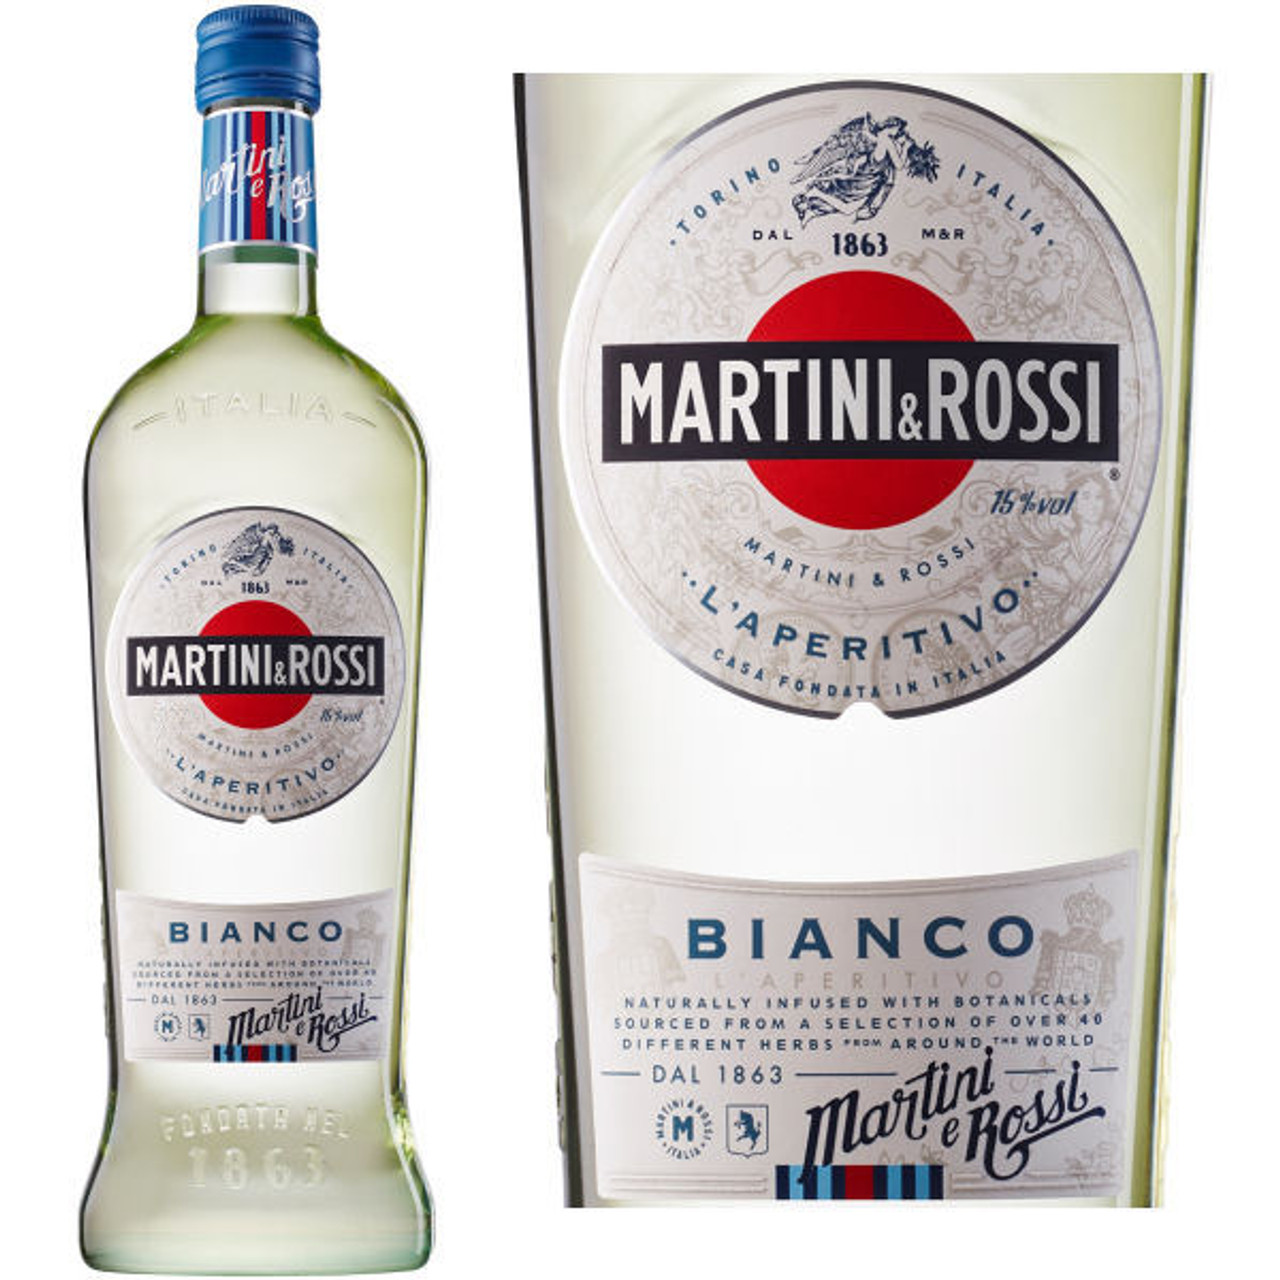 martini-blanc-1l